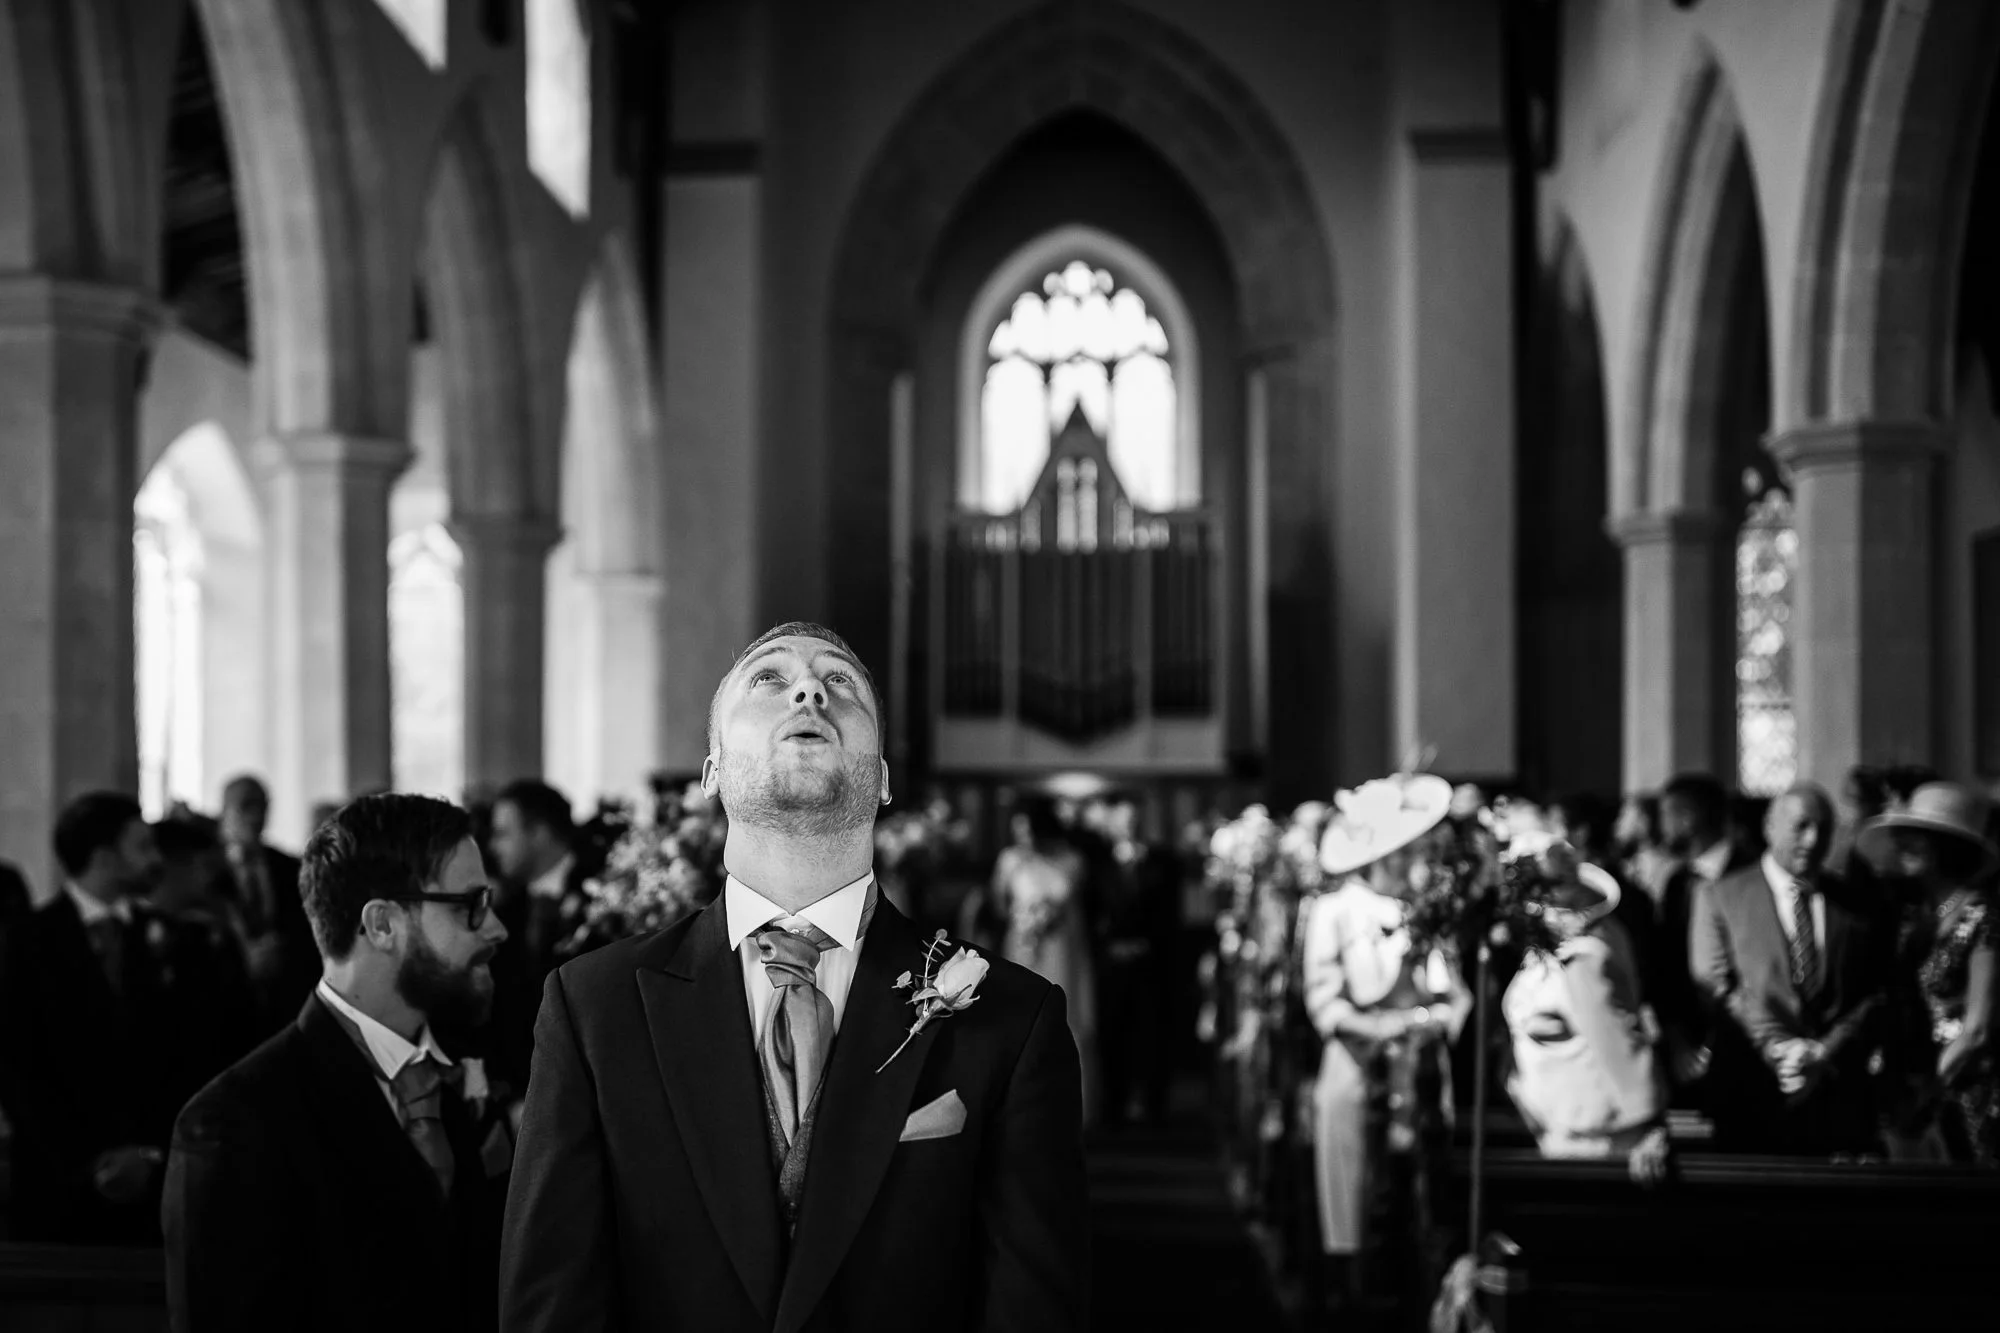 A Groom takes a deep breathe in a Church as the Bride walks down the aisle behind him. Black and white photo.